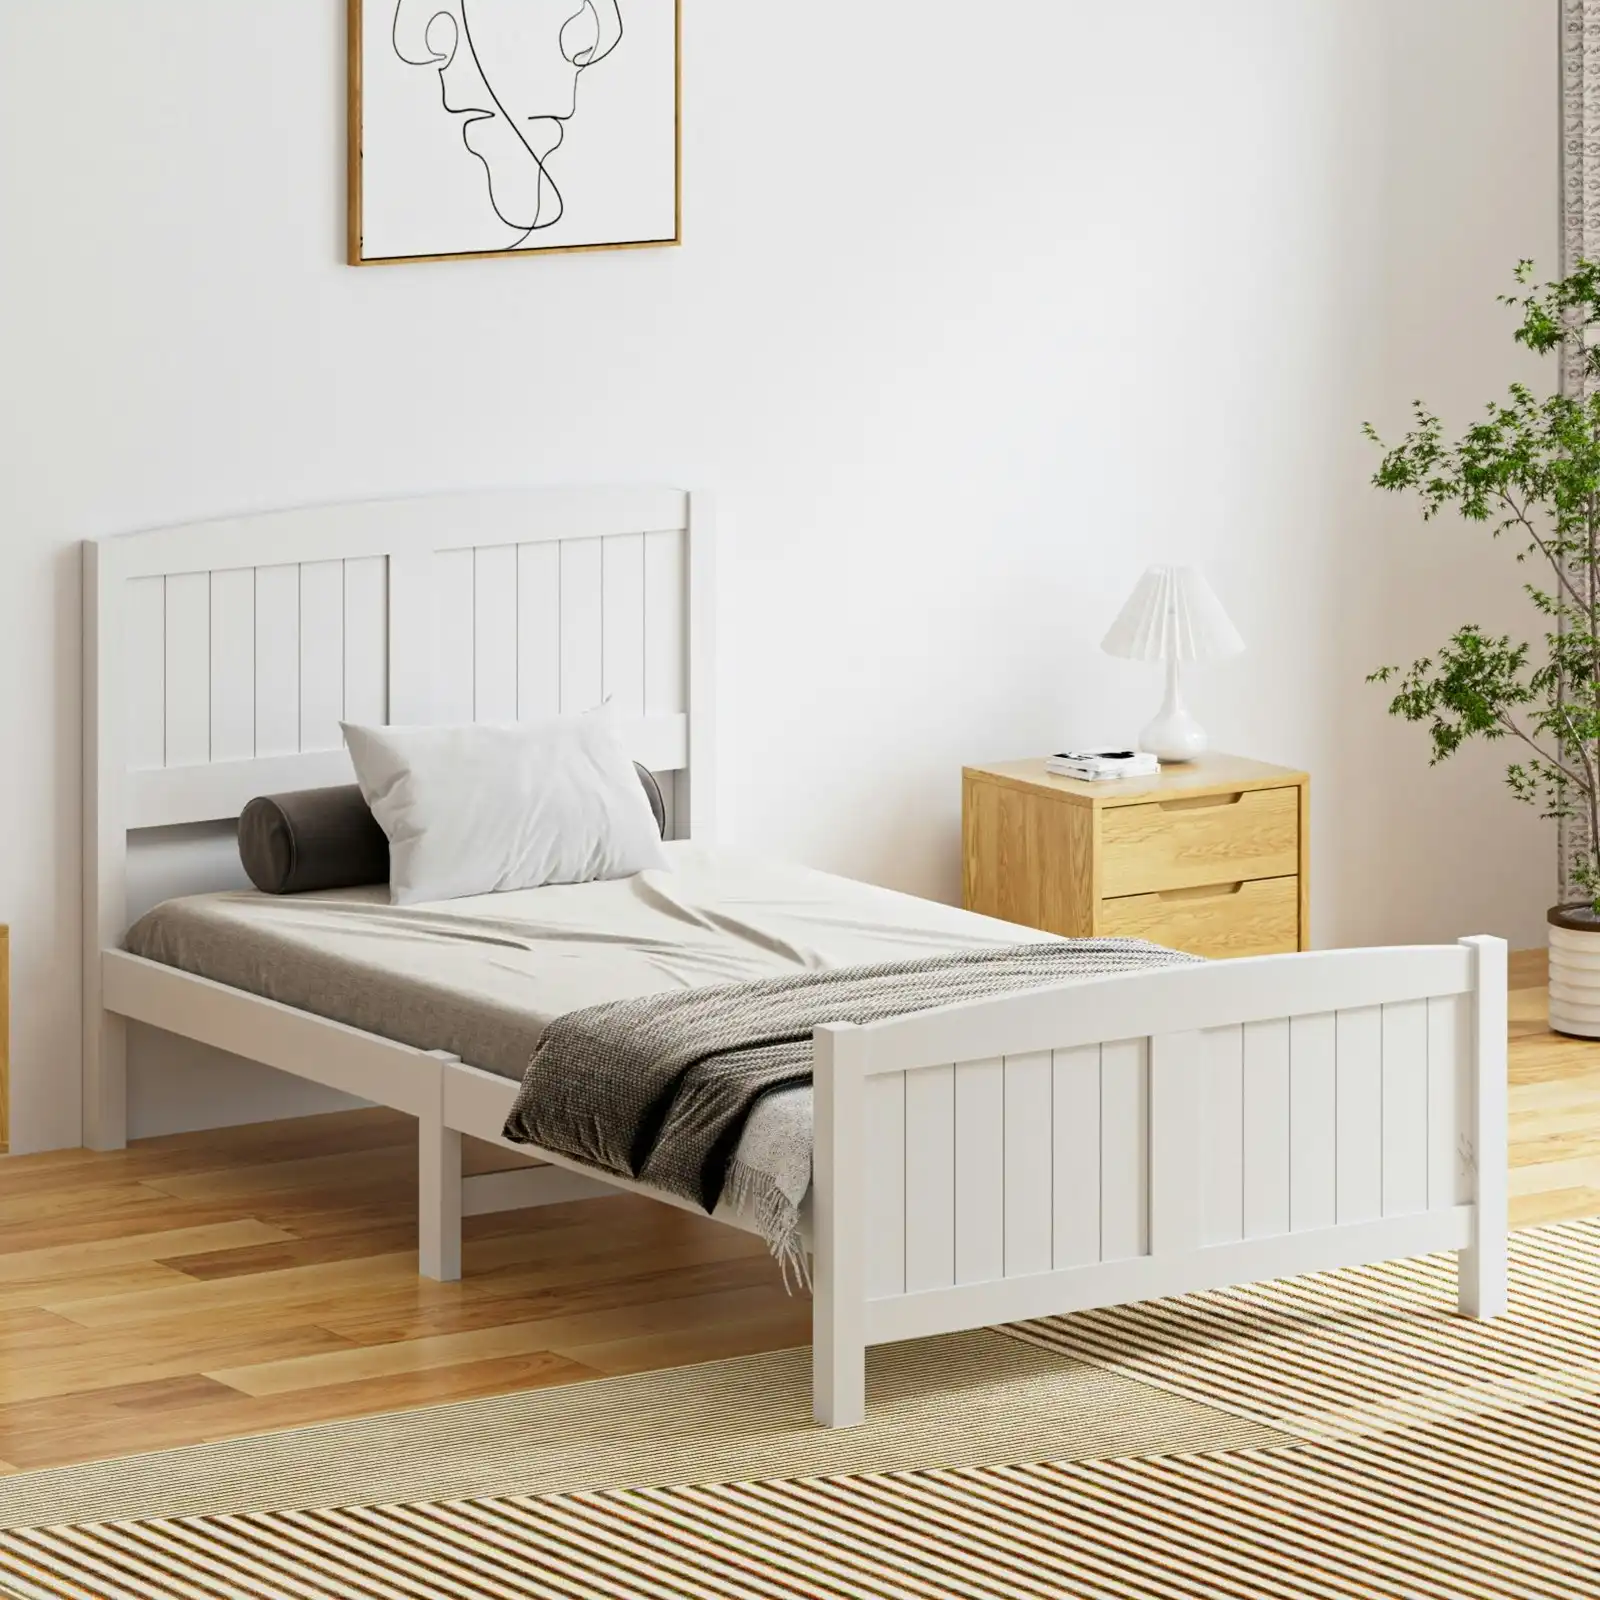 Oikiture Bed Frame King Singe Size Wooden Base Timber Platform White